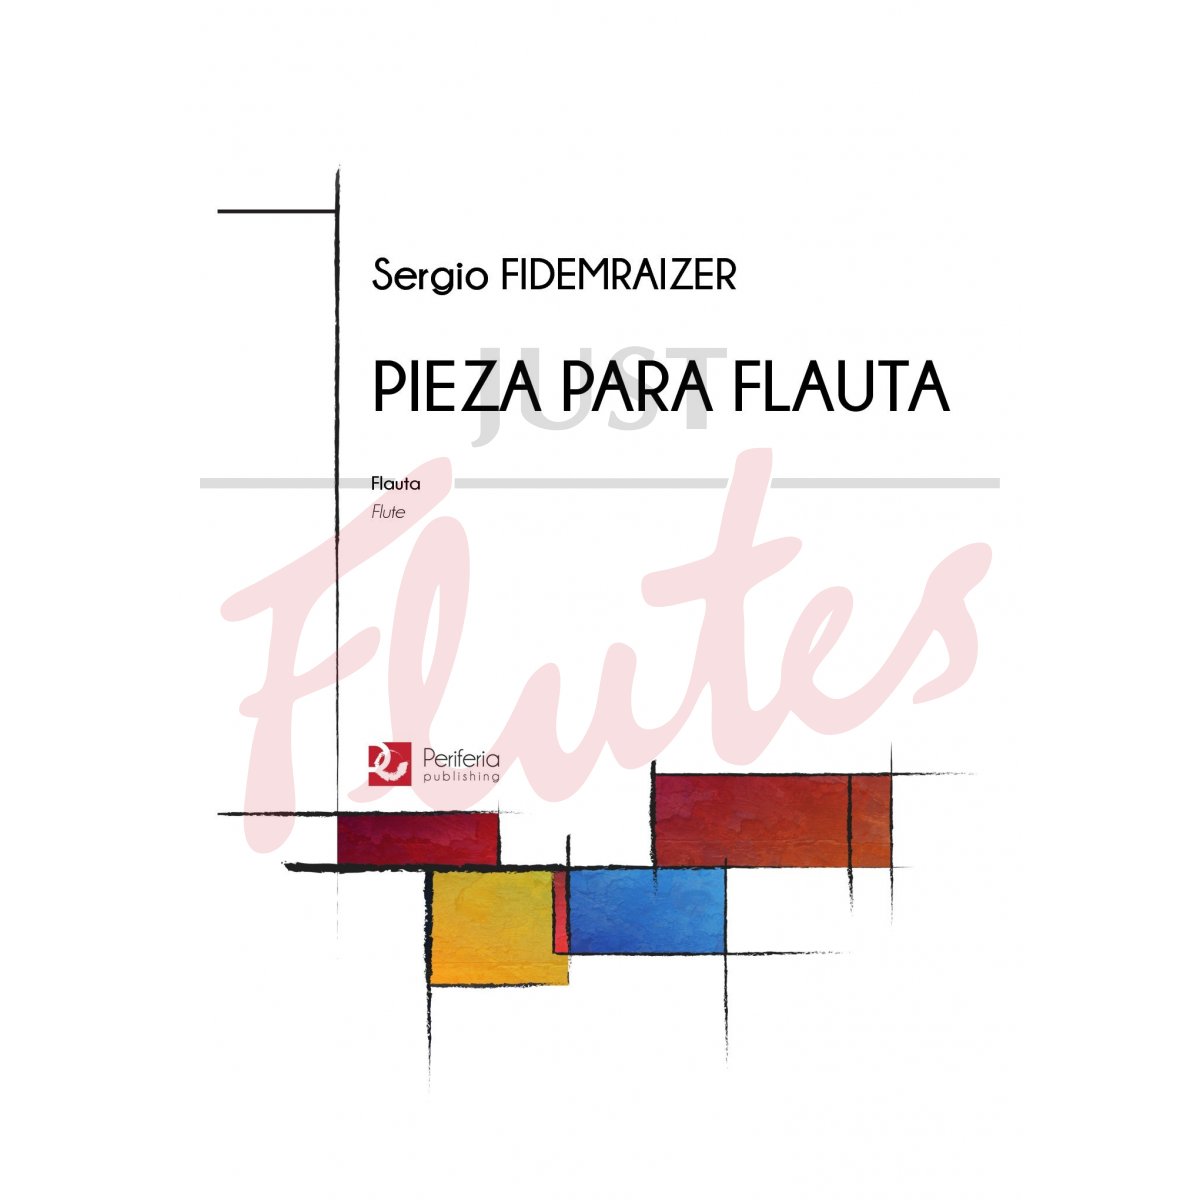 Pieza para Flauta for Solo Flute